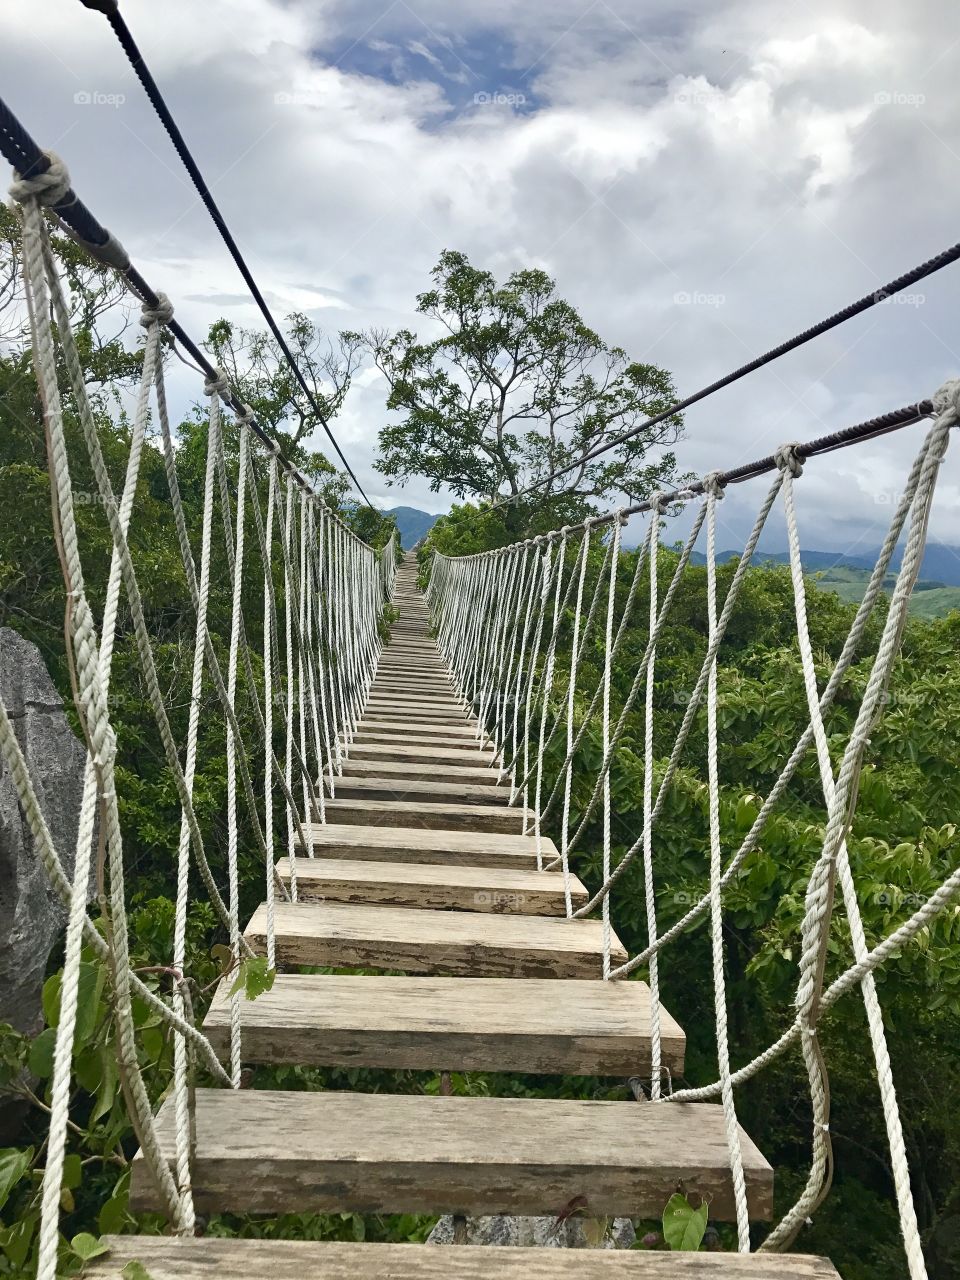 Hanging Bridge at Masungi Georeserve.